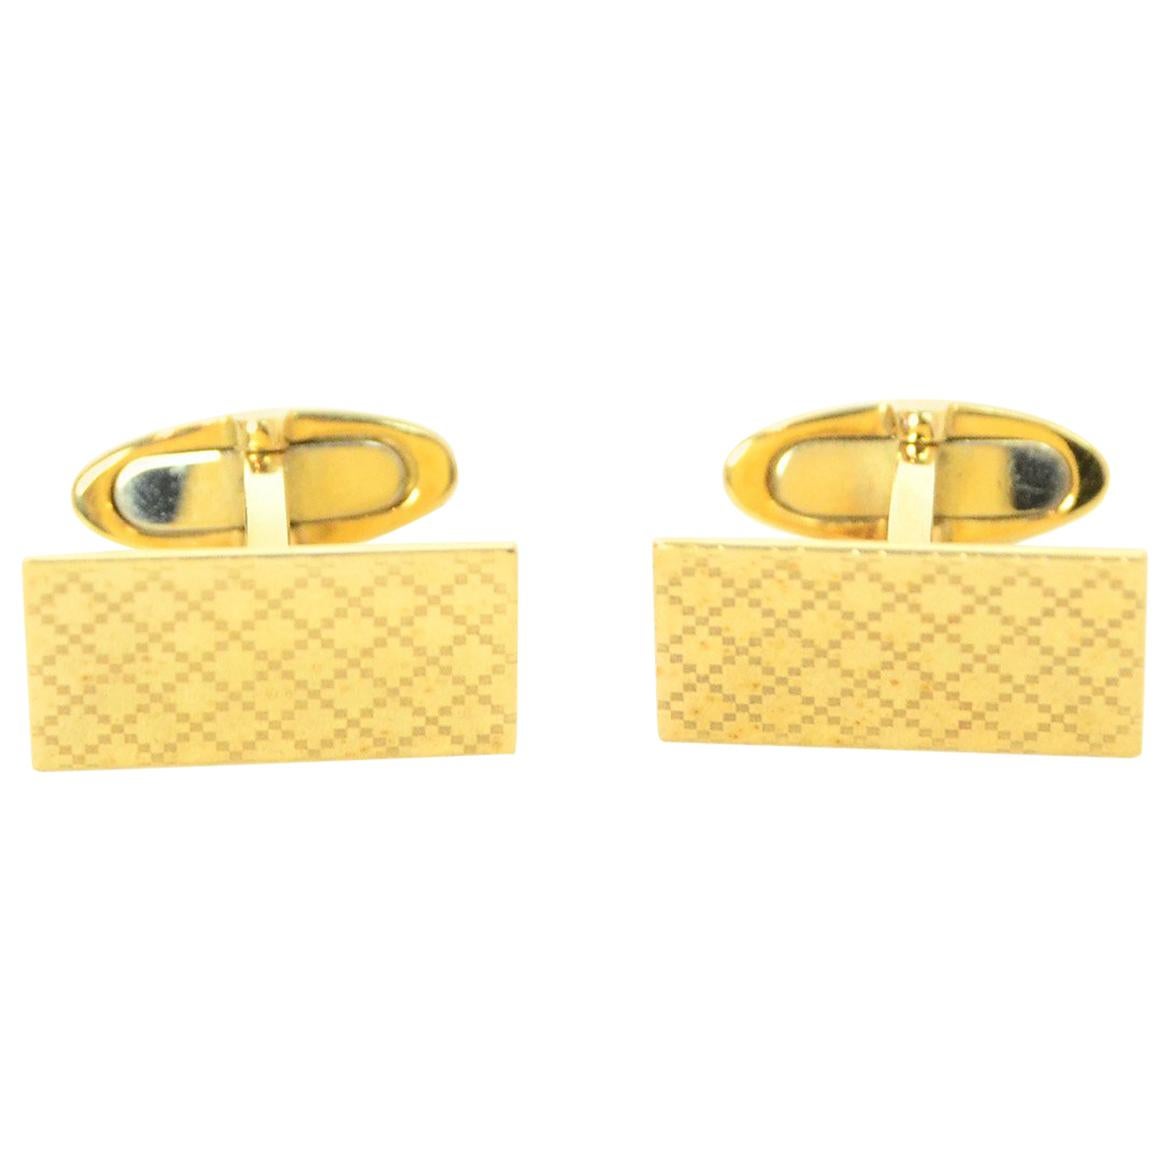 Gucci Men's Yellow Gold Diamantissima Cufflinks with Pillow 